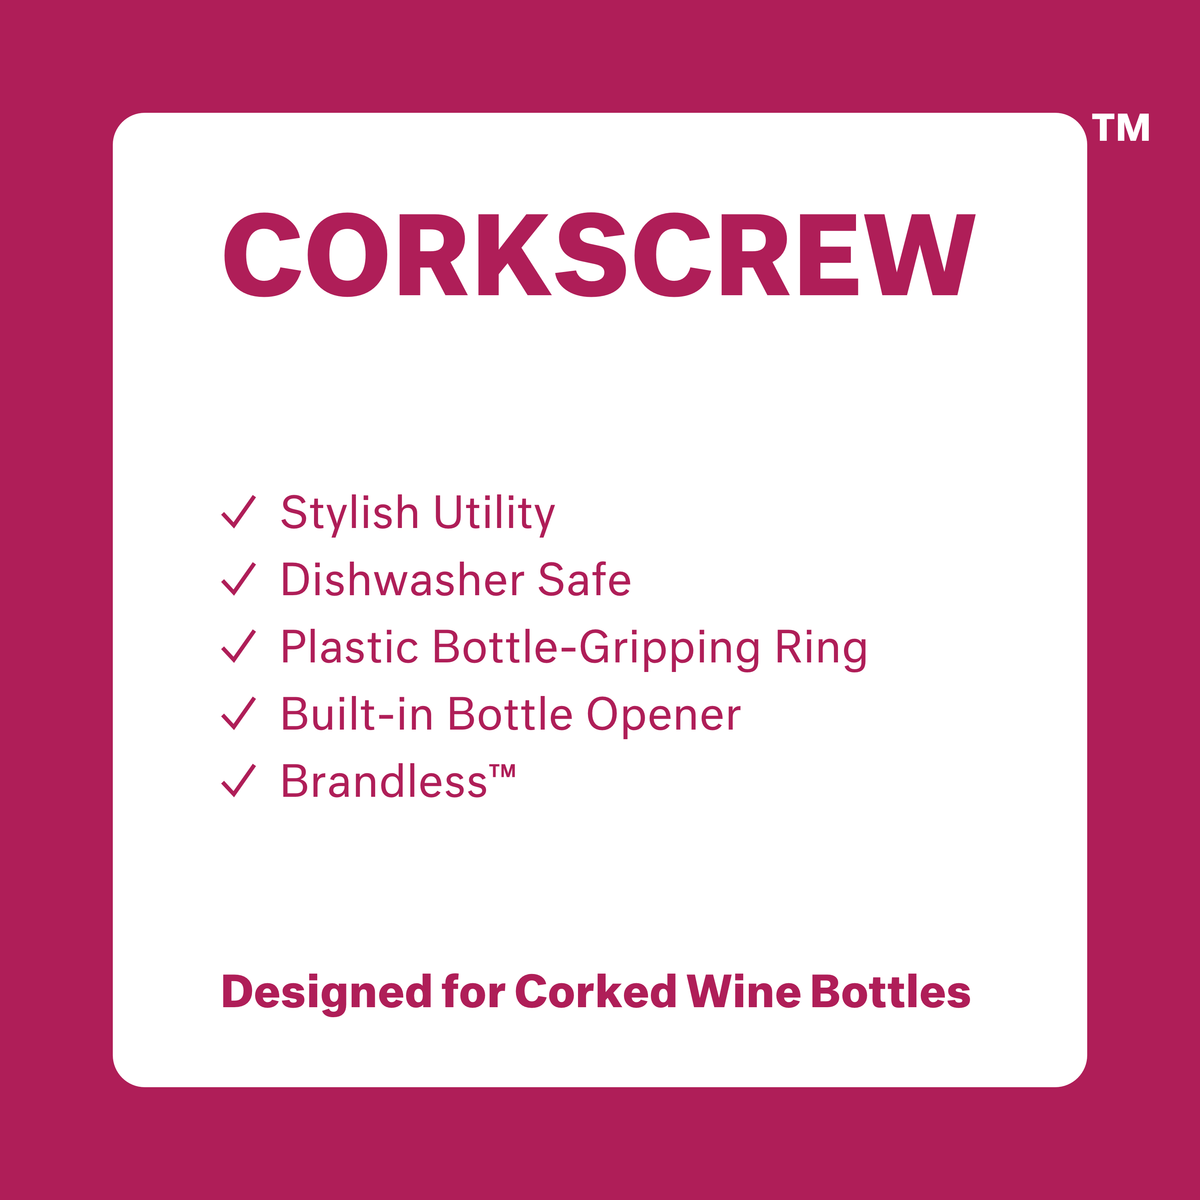 Corkscrew: stylish utility, dishwasher safe, plastic bottle gripping ring, built-in bottle opener. brandless. Designed for corked wine bottles.